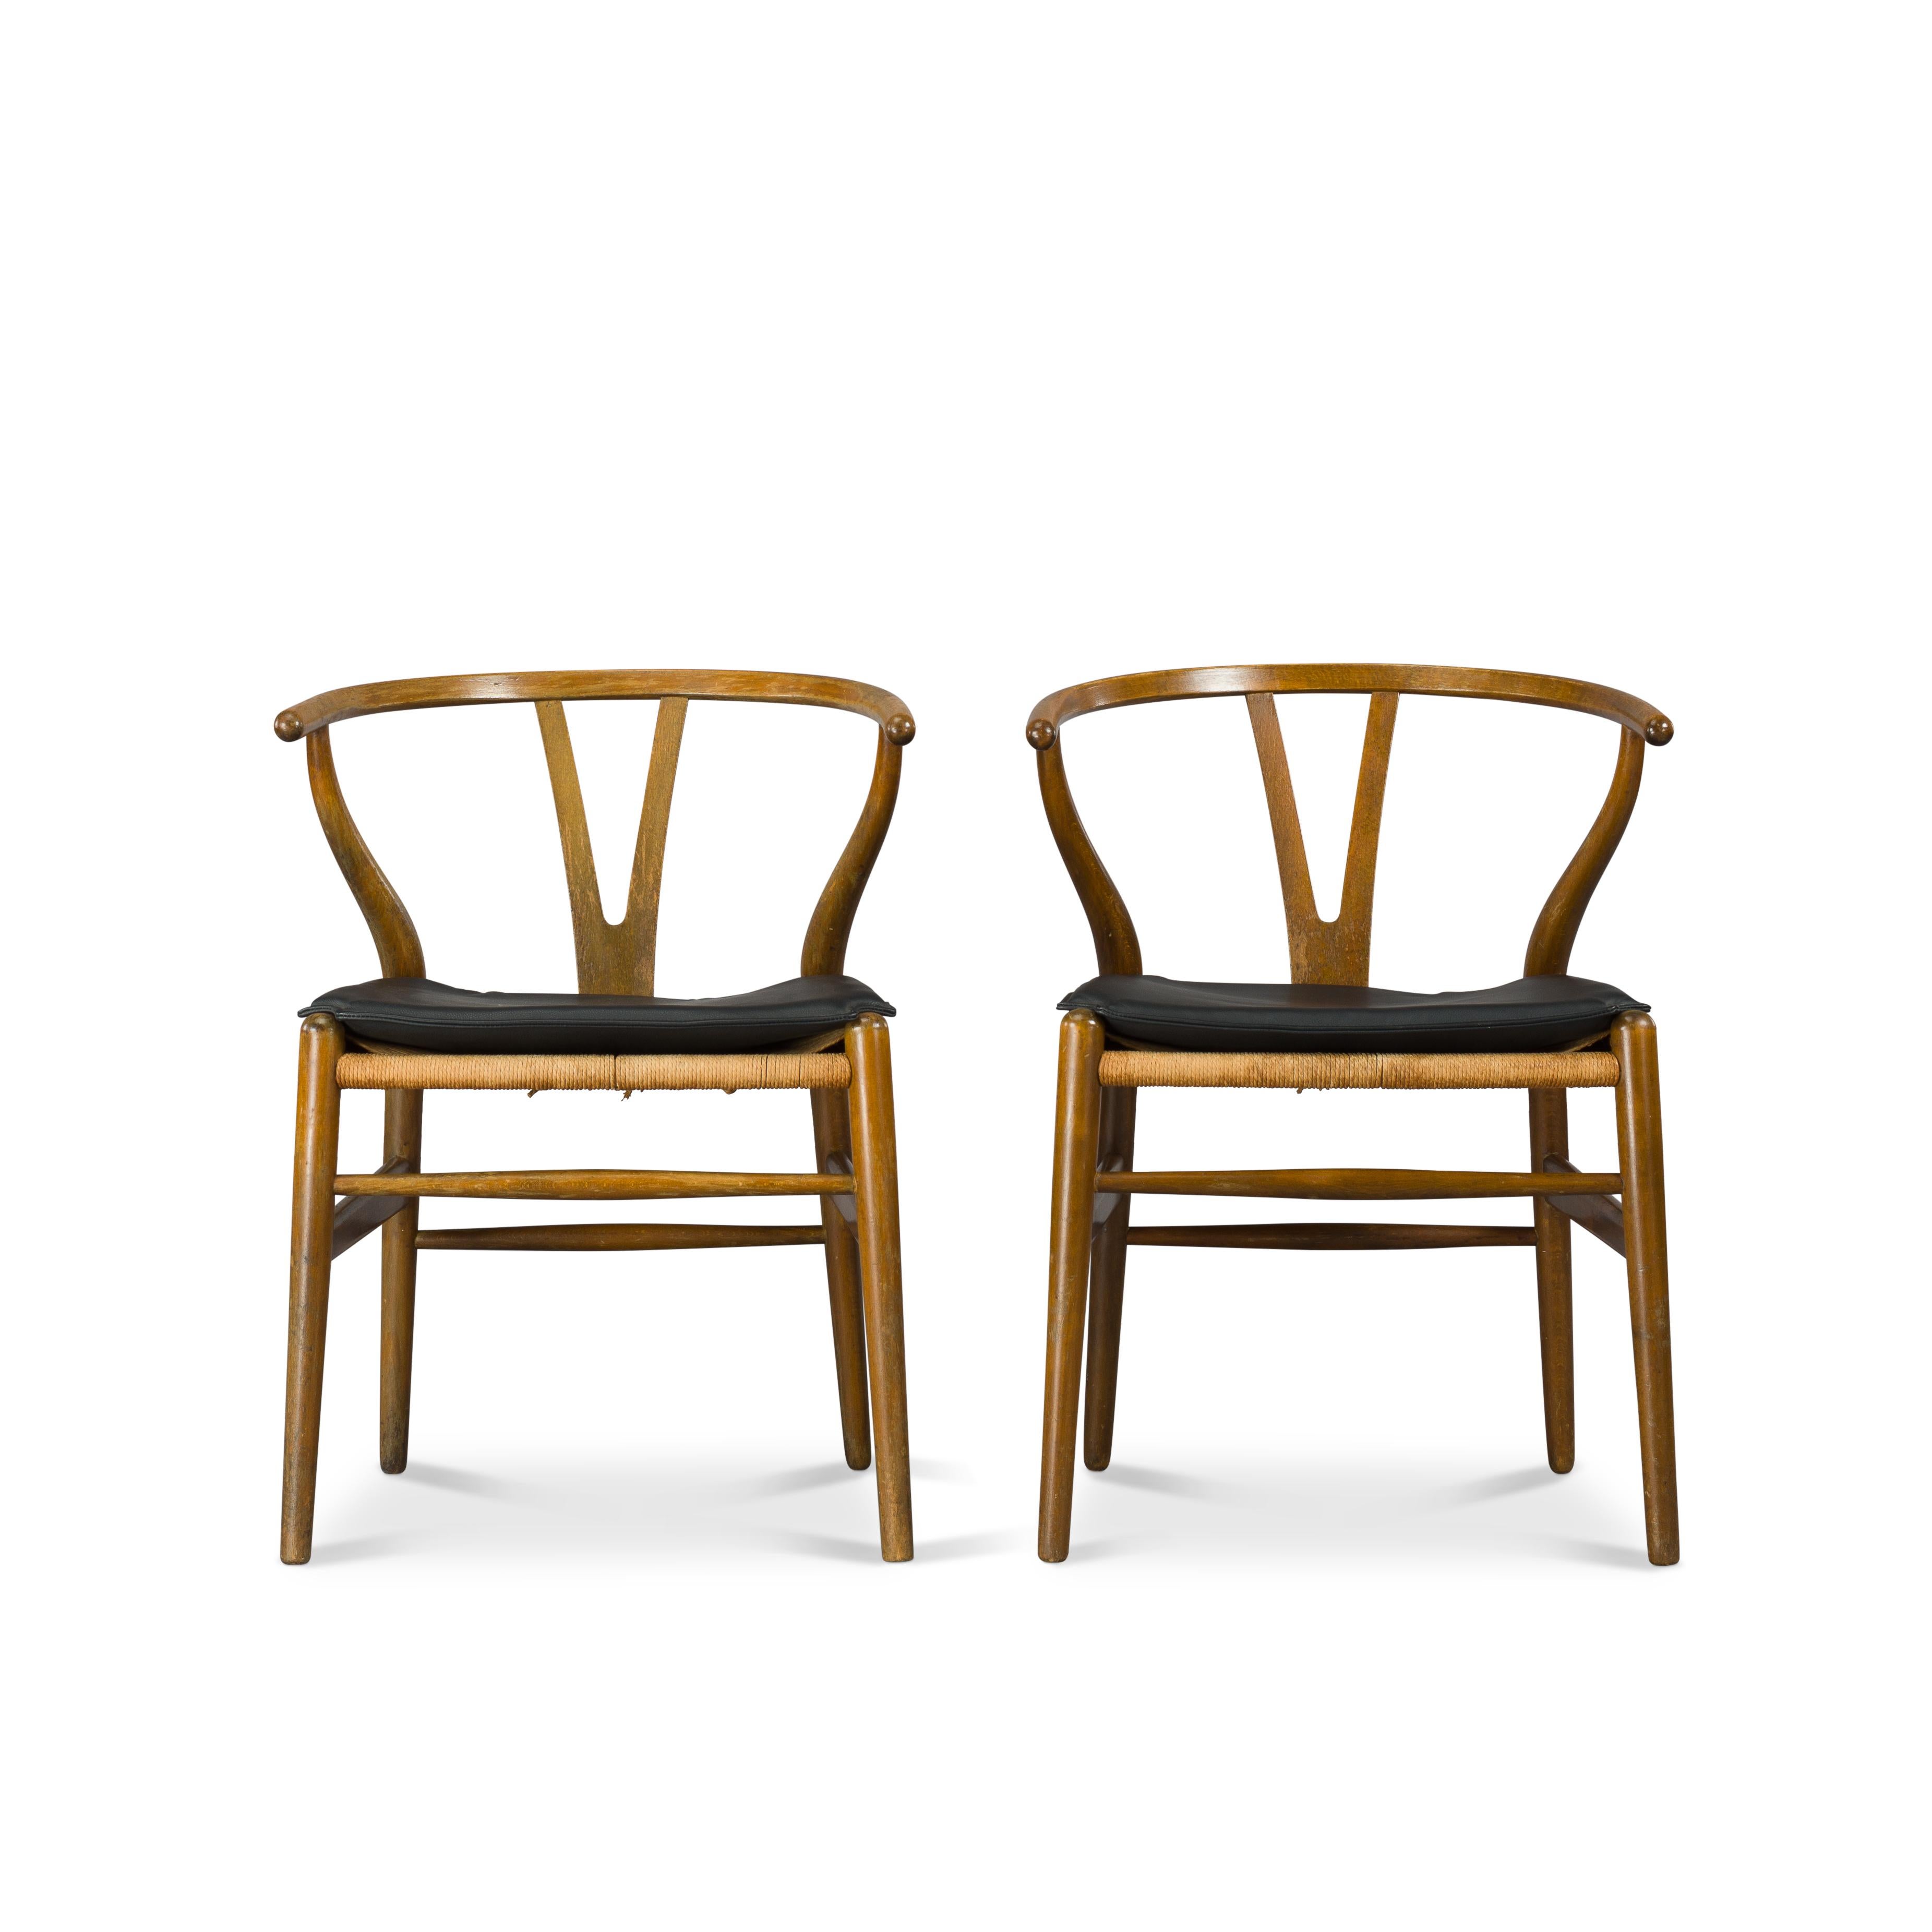 Mid-Century Modern Midcentury CH24 Wishbone Chairs by Hans J. Wegner for Carl Hansen & Søn Made in